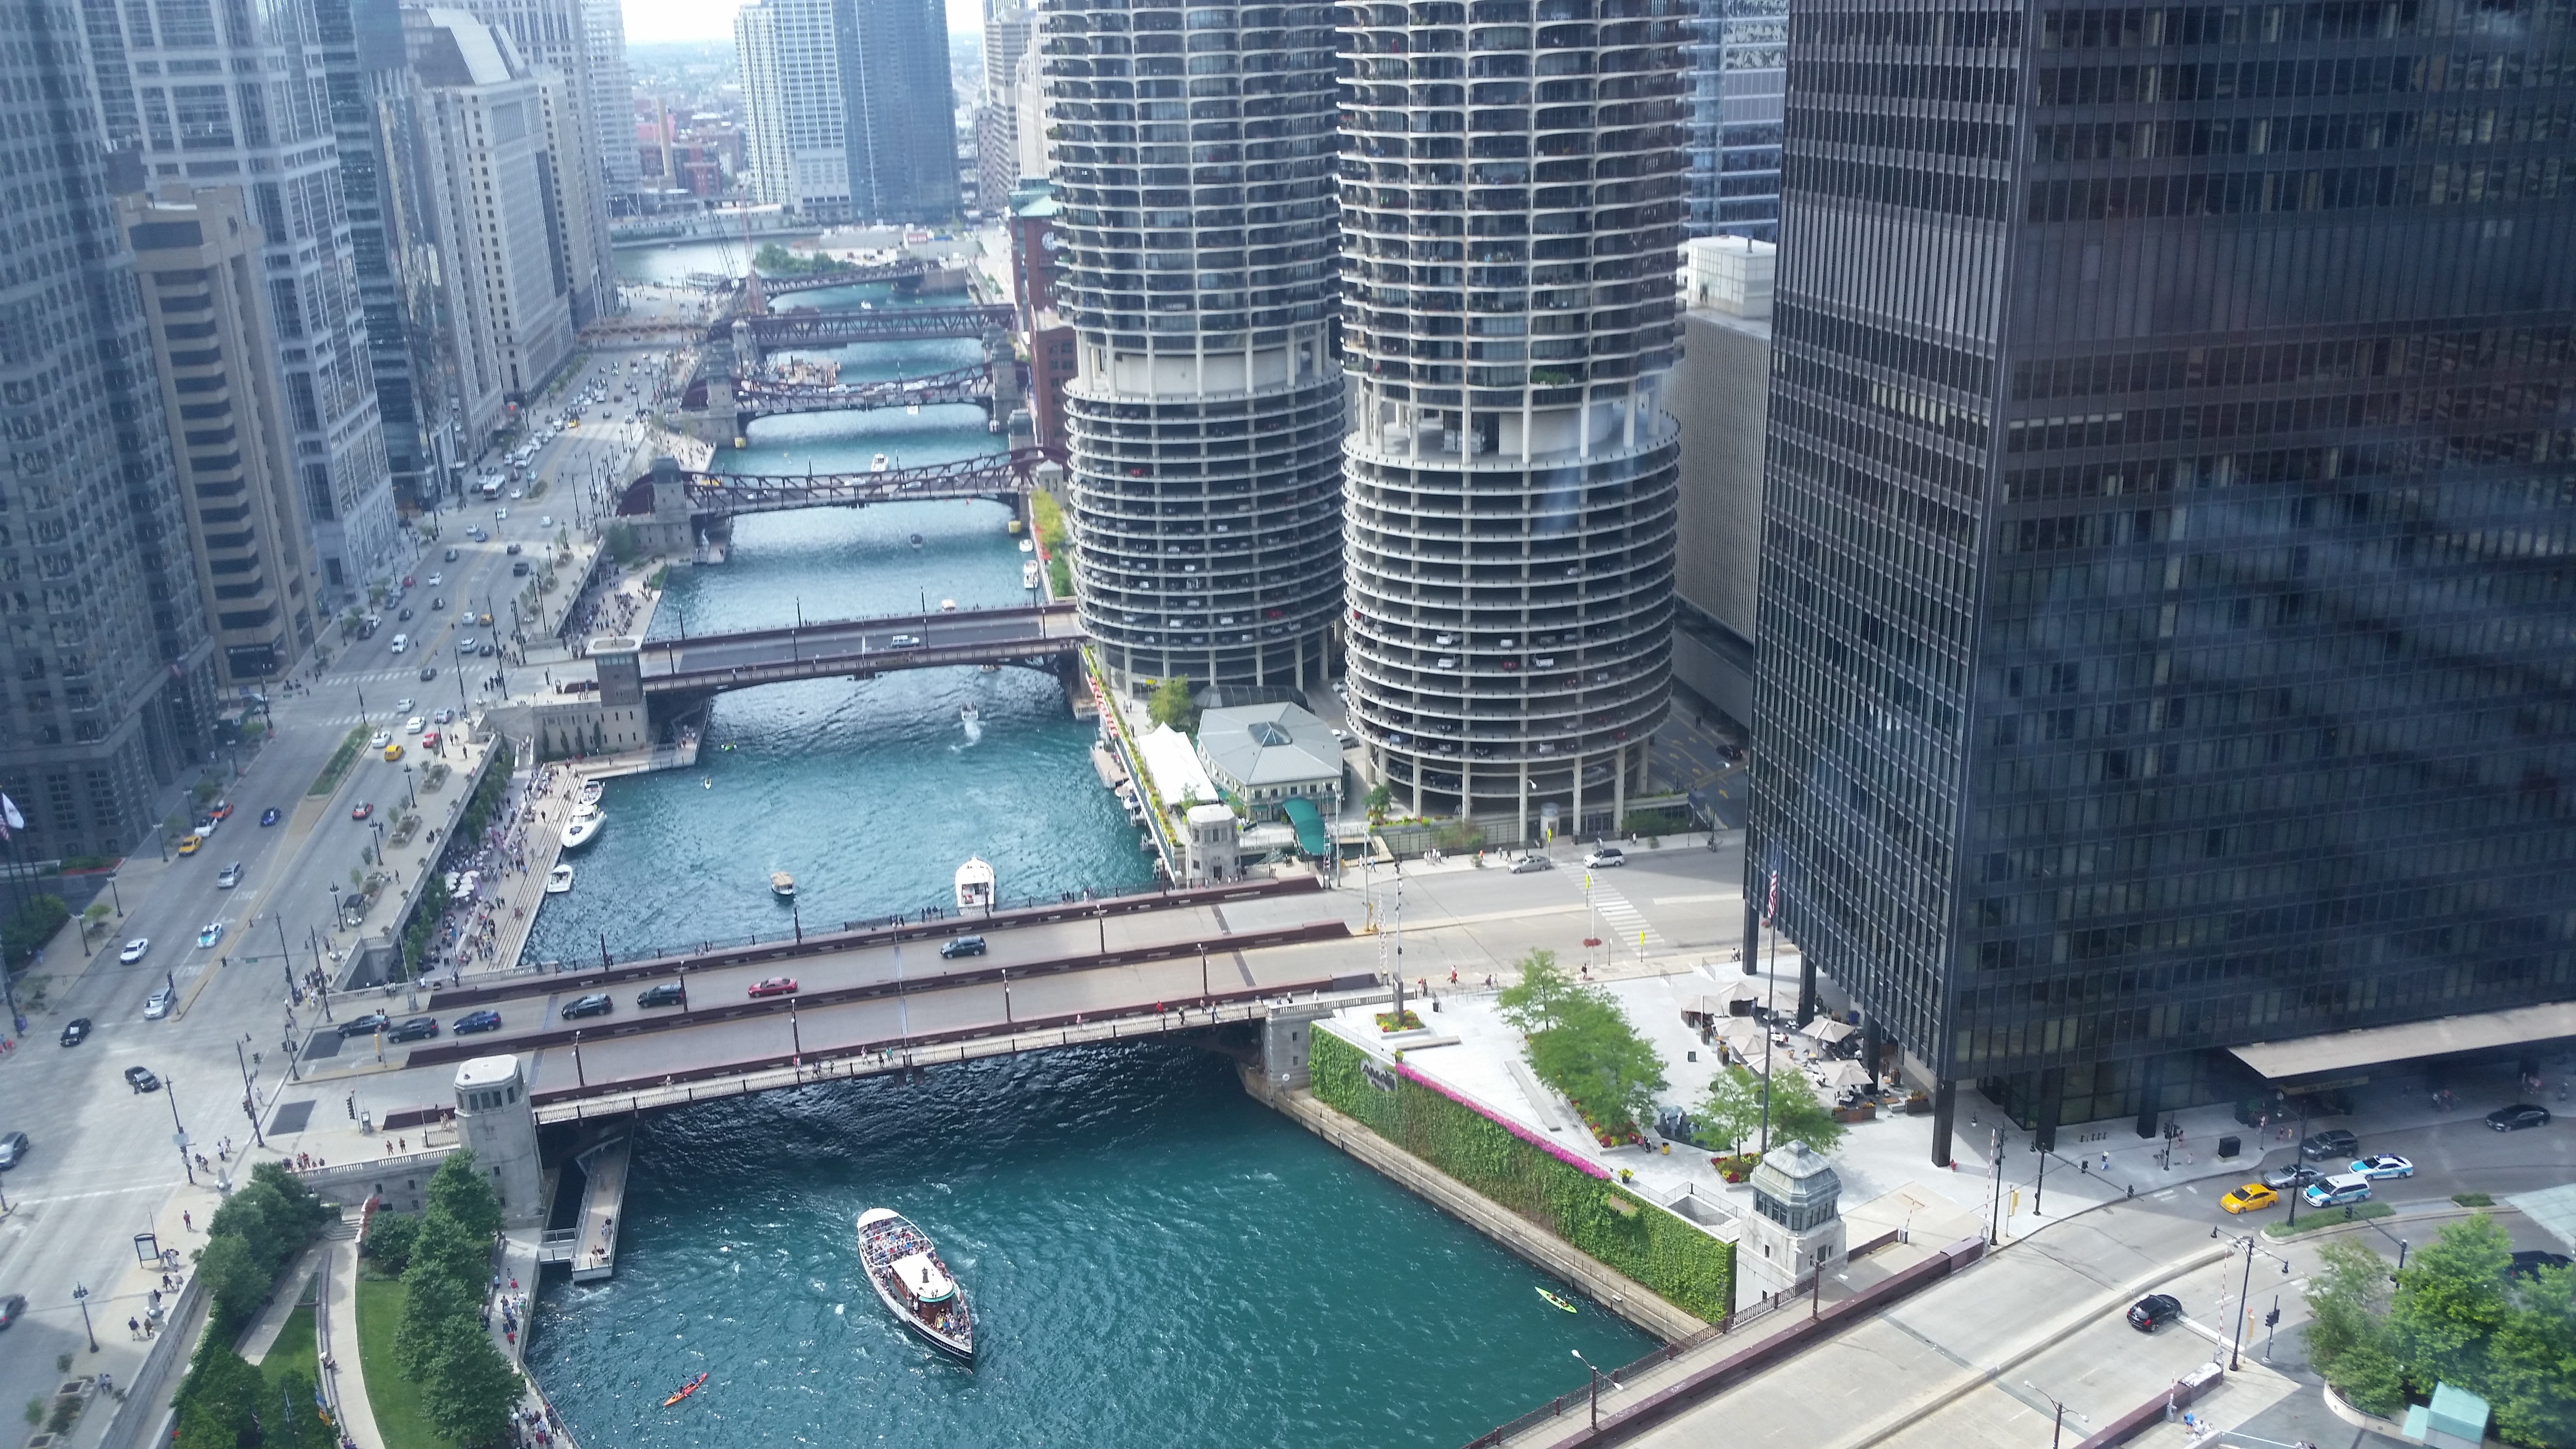 File:Chicago River 6.jpg - Wikimedia Commons